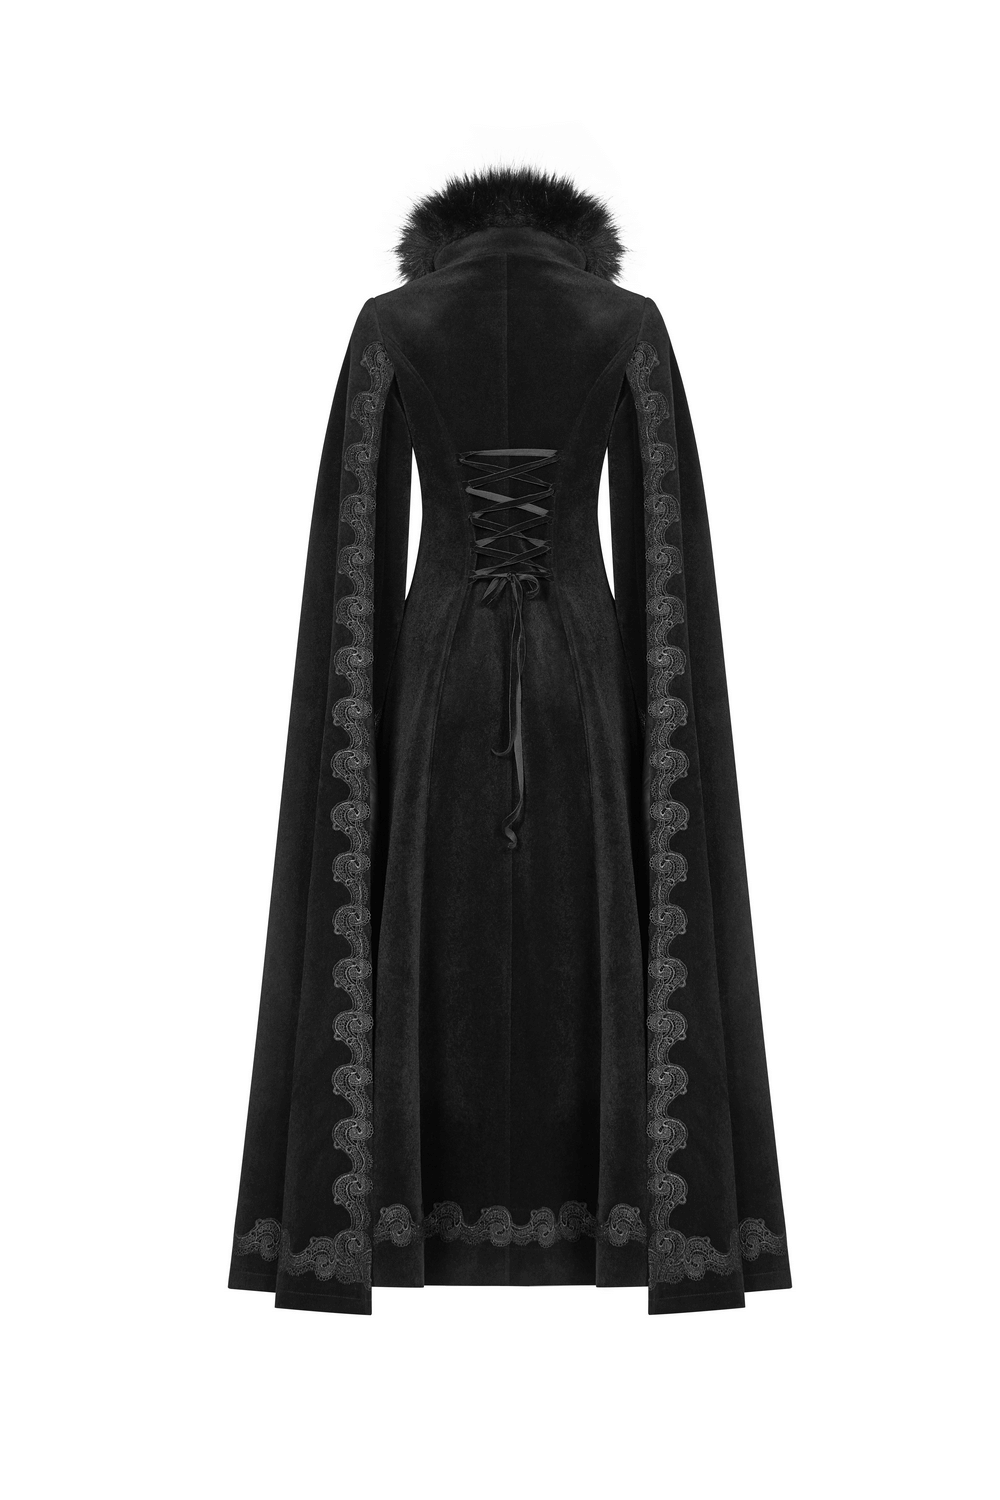 Enchanting Gothic Vintage Velvet Long Coat with Fur - HARD'N'HEAVY